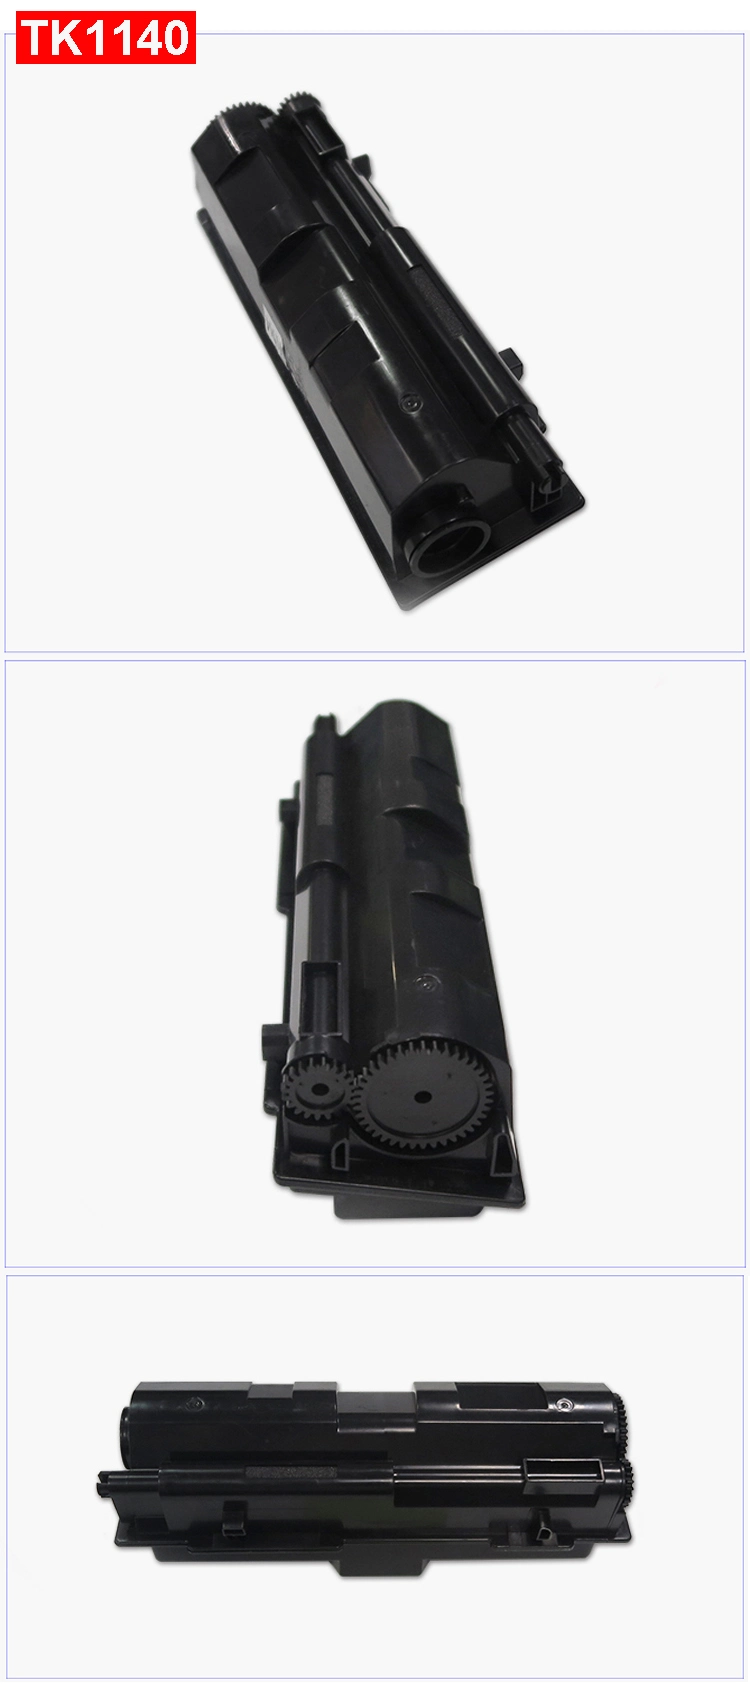 Fs1135mfp Kyocera Toner Cartridges Tk1140 for Kyocera Fs1035mfp